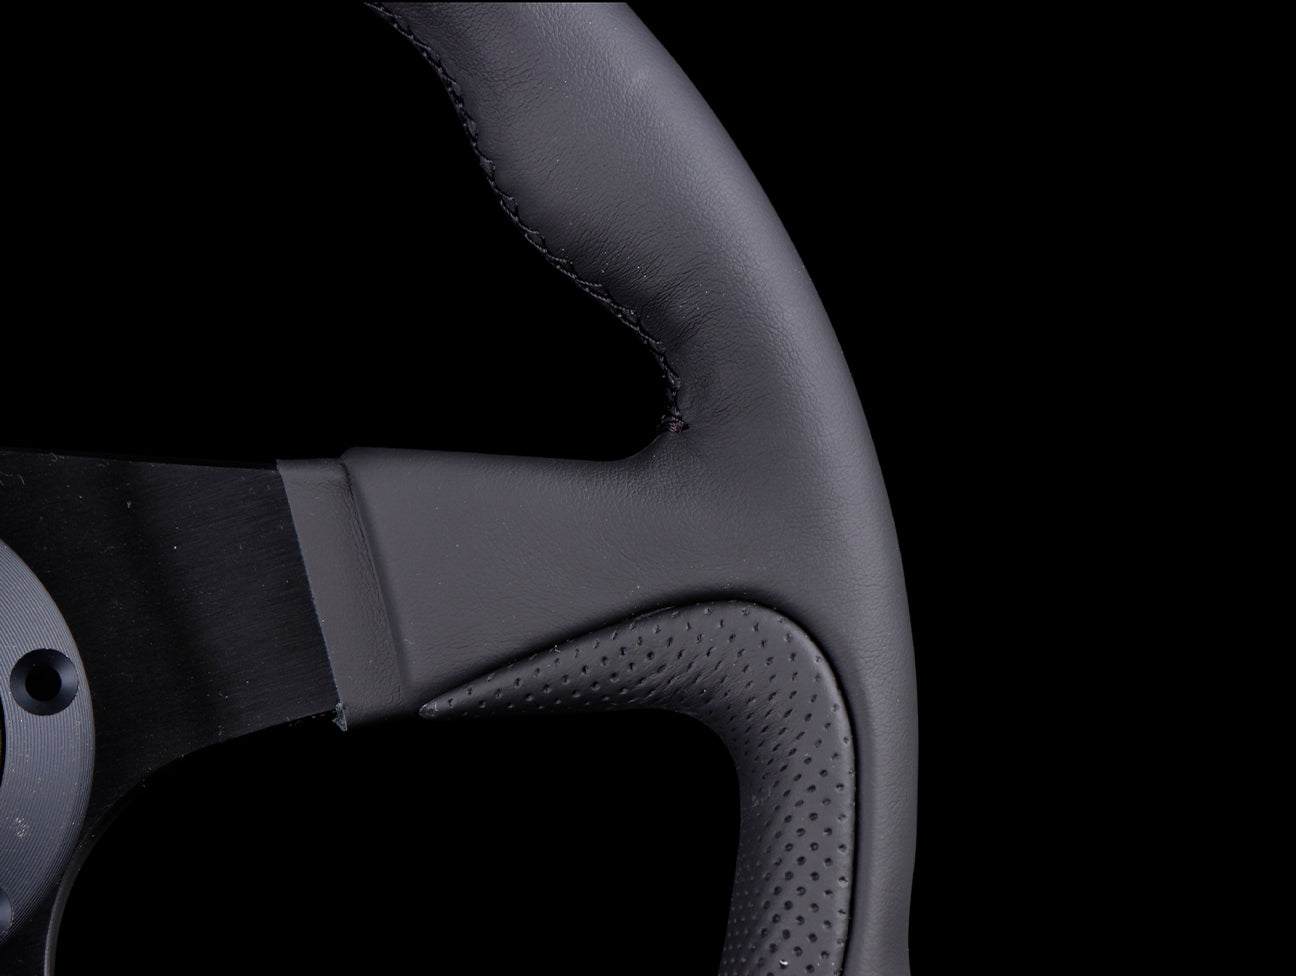 Nardi Challenge 350mm Steering Wheel - Black Leather / Black Stitch